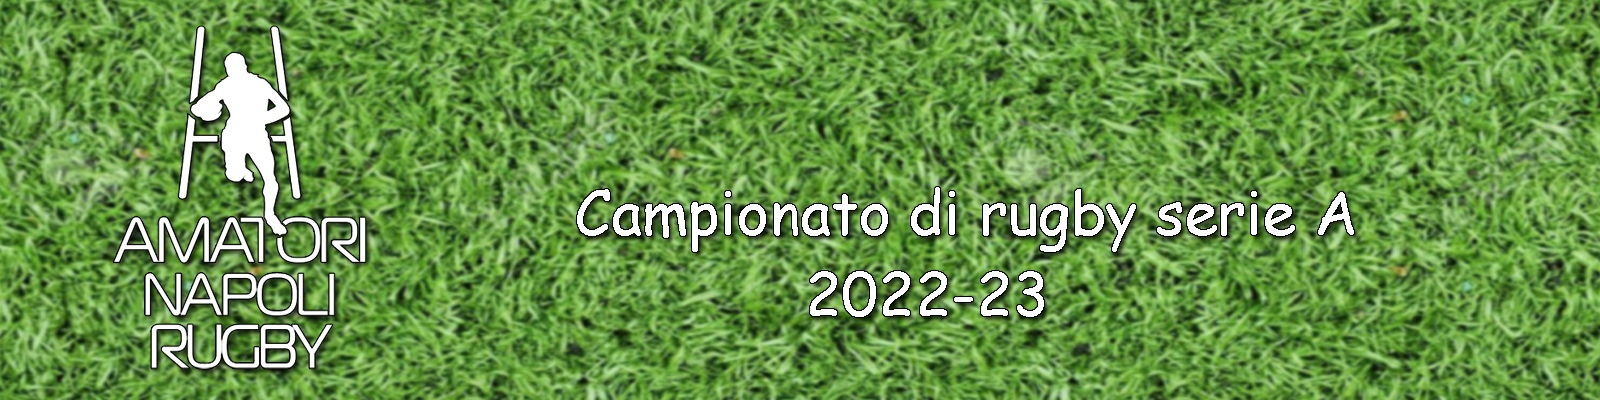 Amatori Napoli Rugby 2022-23